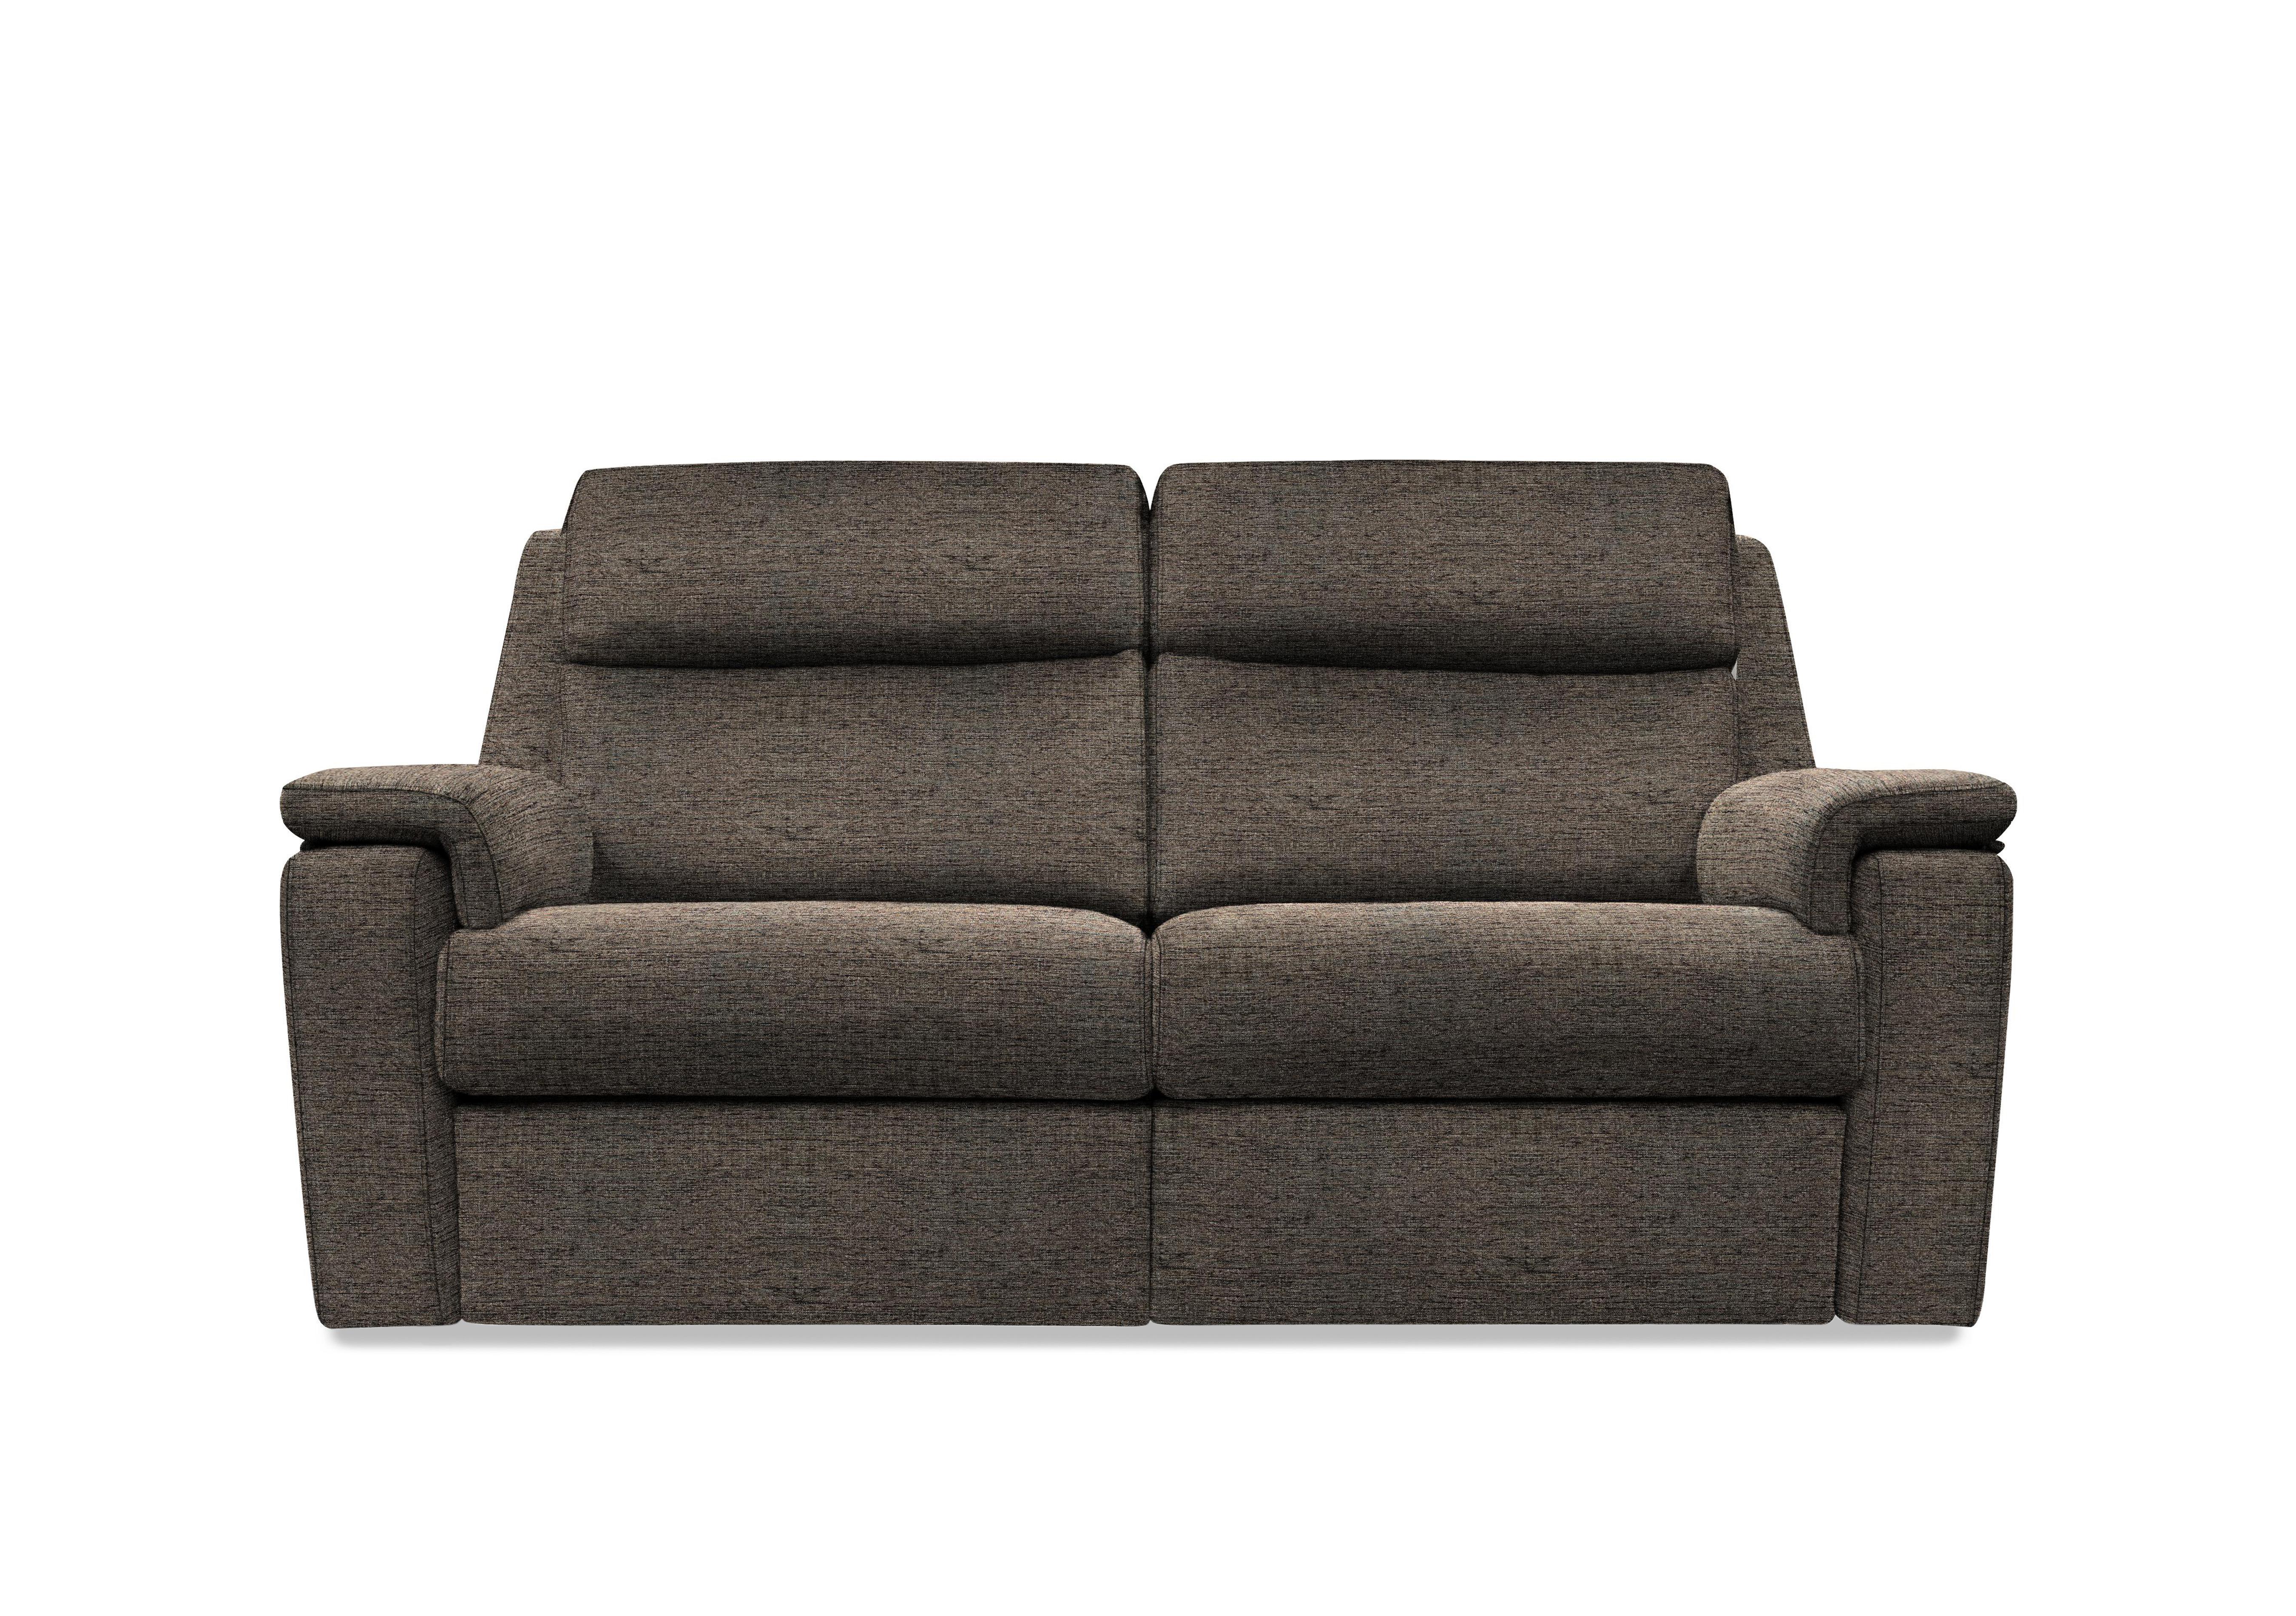 Thornbury 3 Seater Fabric Sofa in A008 Yarn Slate on Furniture Village